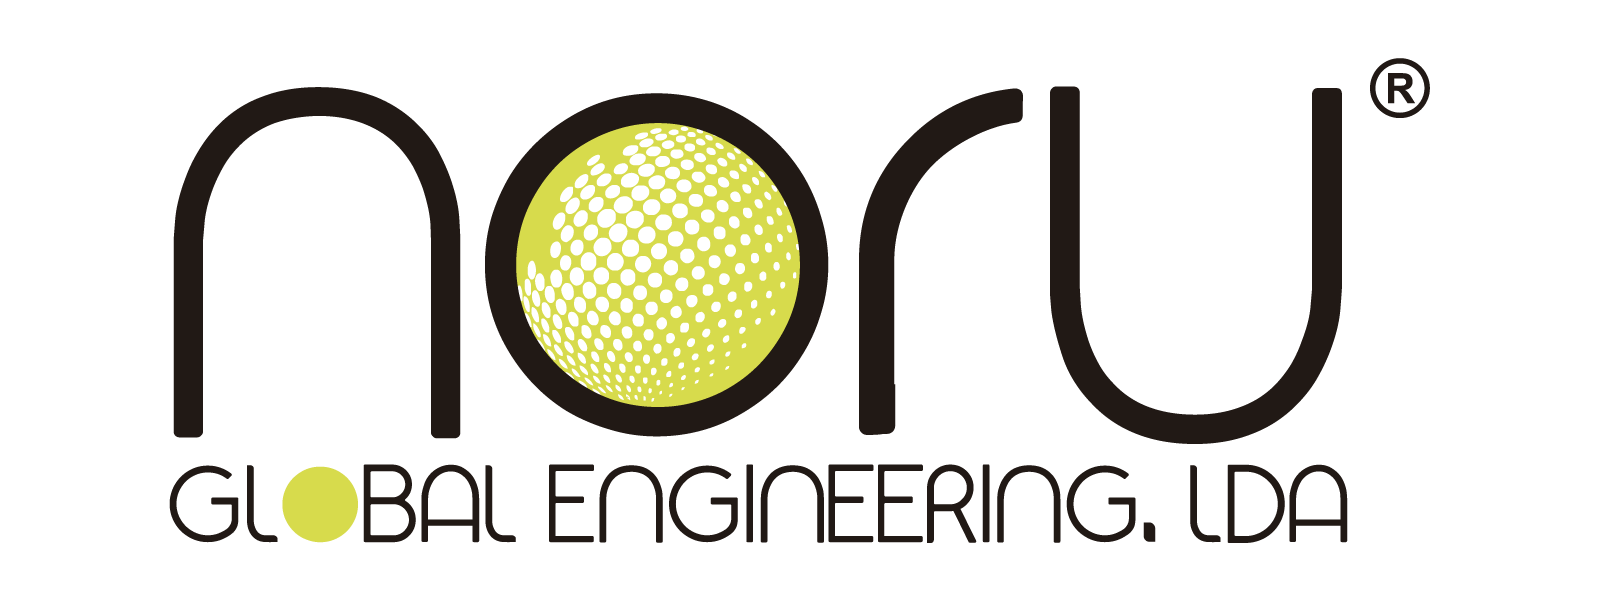 noru - Global Engineering, Lda